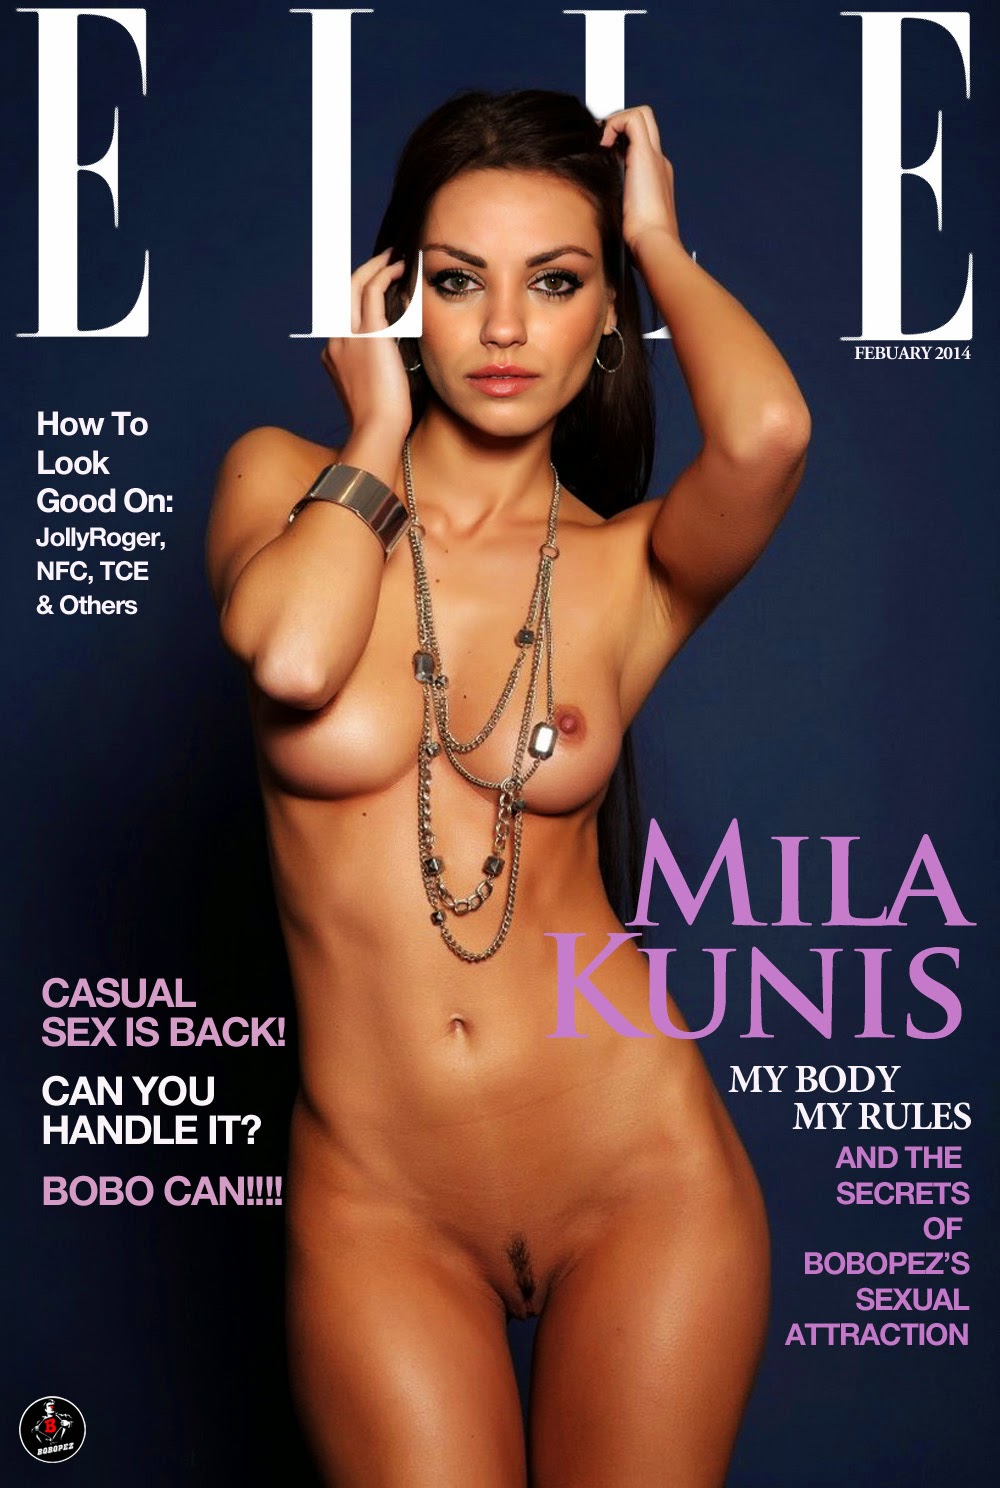 Mila kunis in the nude